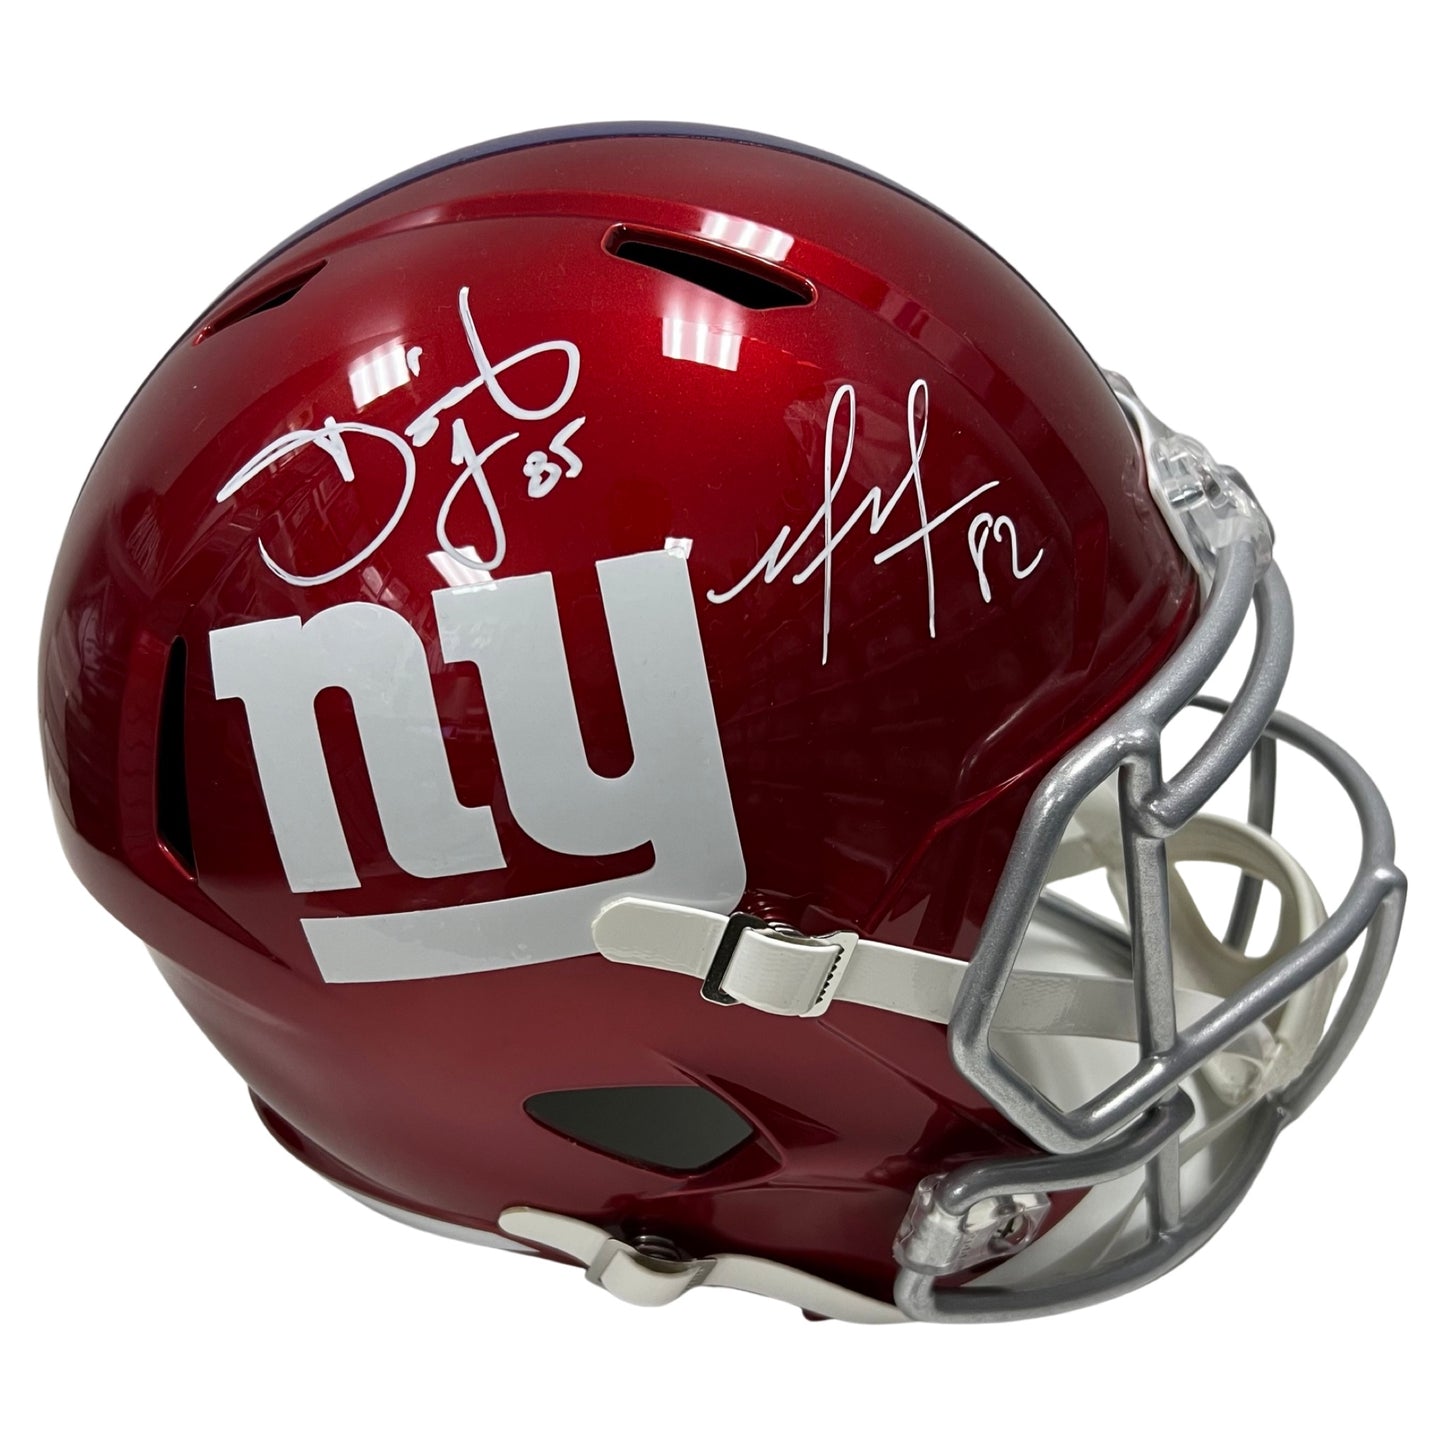 David Tyree & Mario Manningham Autographed New York Giants Flash Replica Helmet Steiner CX